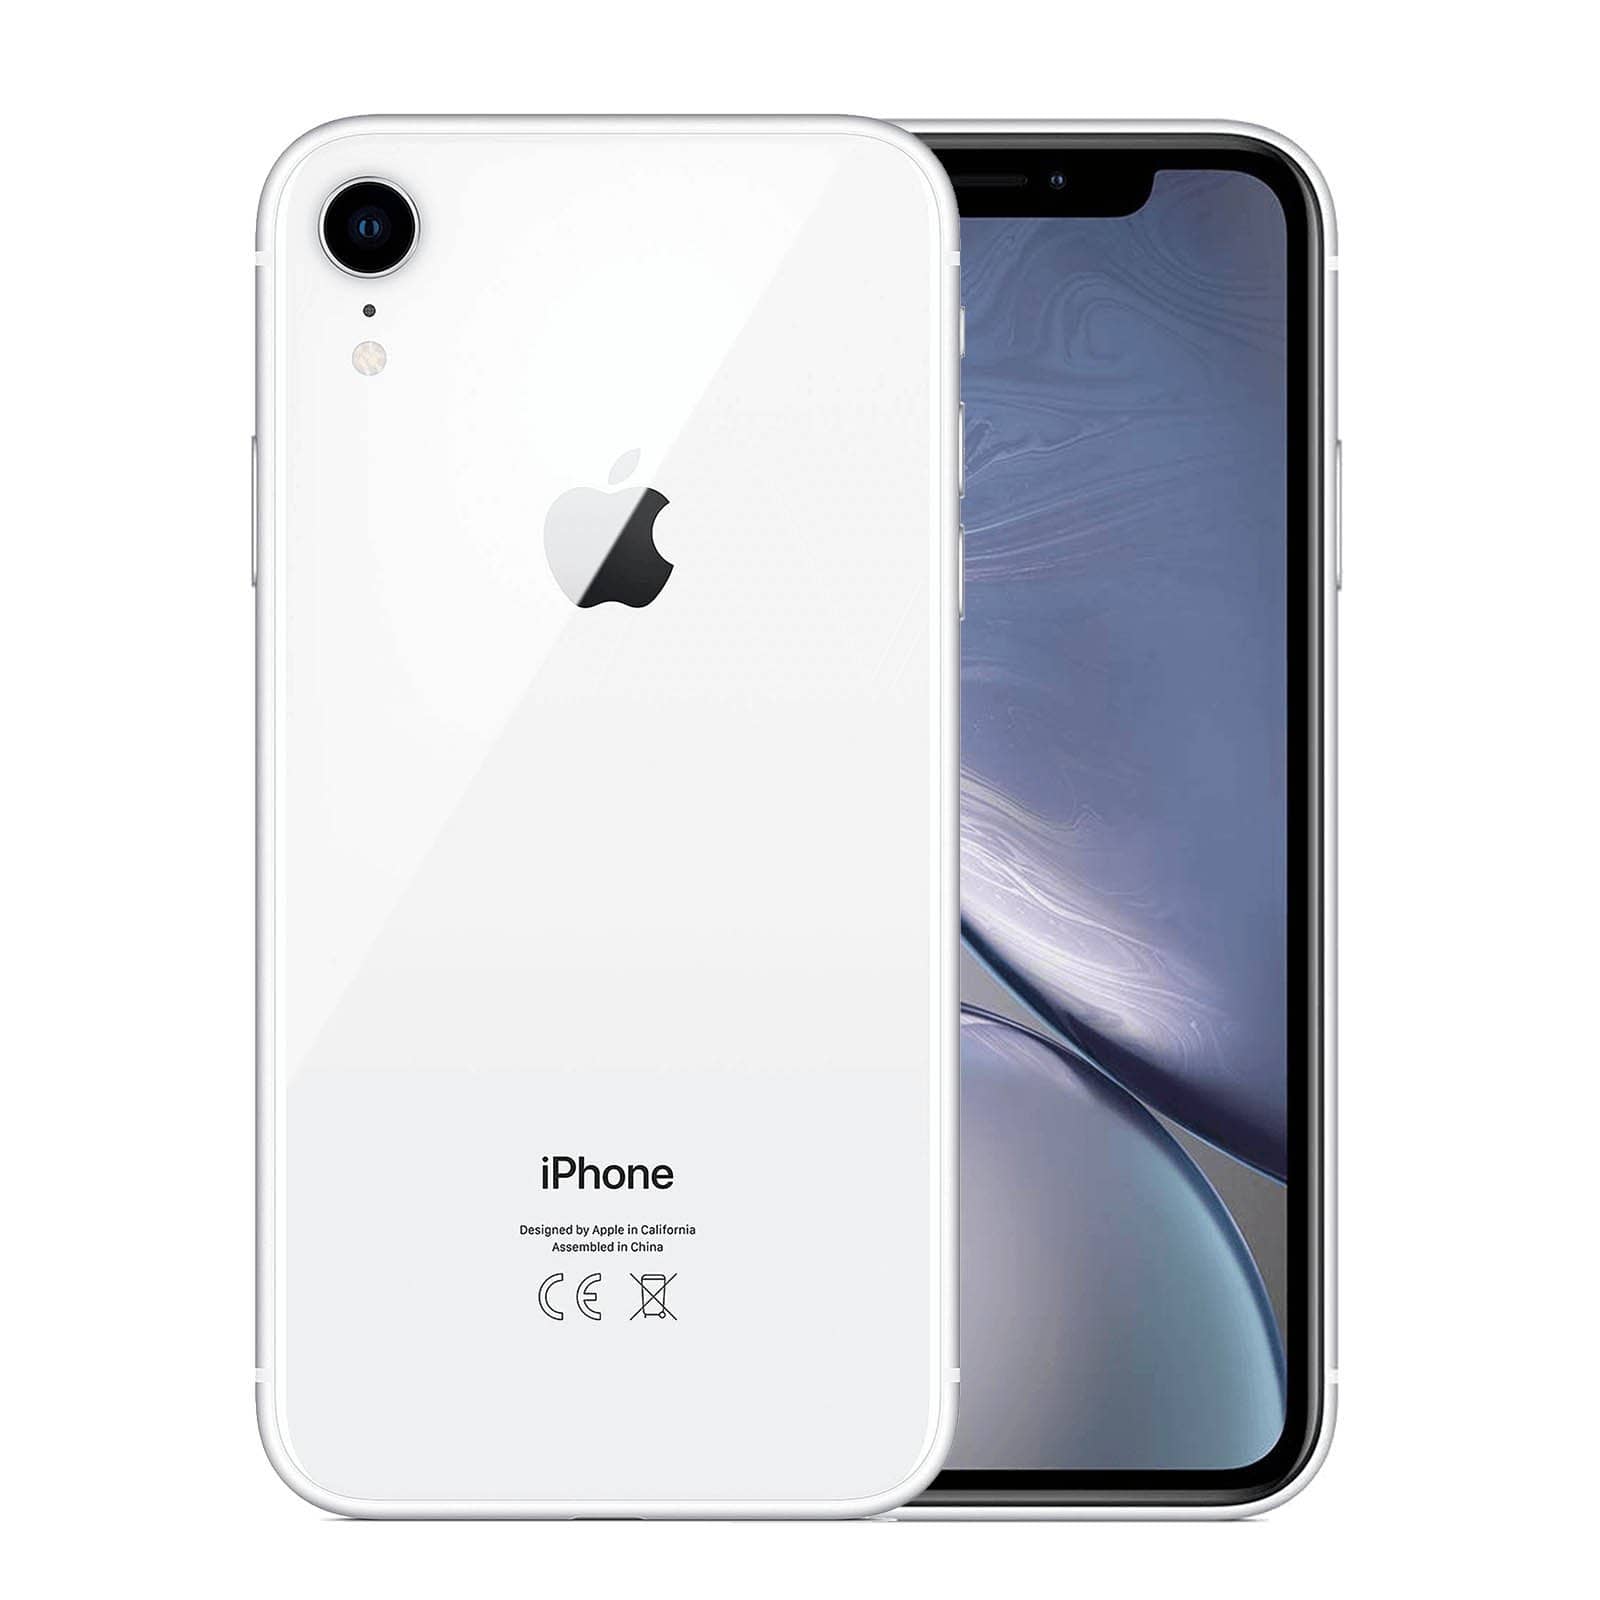 Apple iPhone XR 256GB White Good - Unlocked 256GB White Good